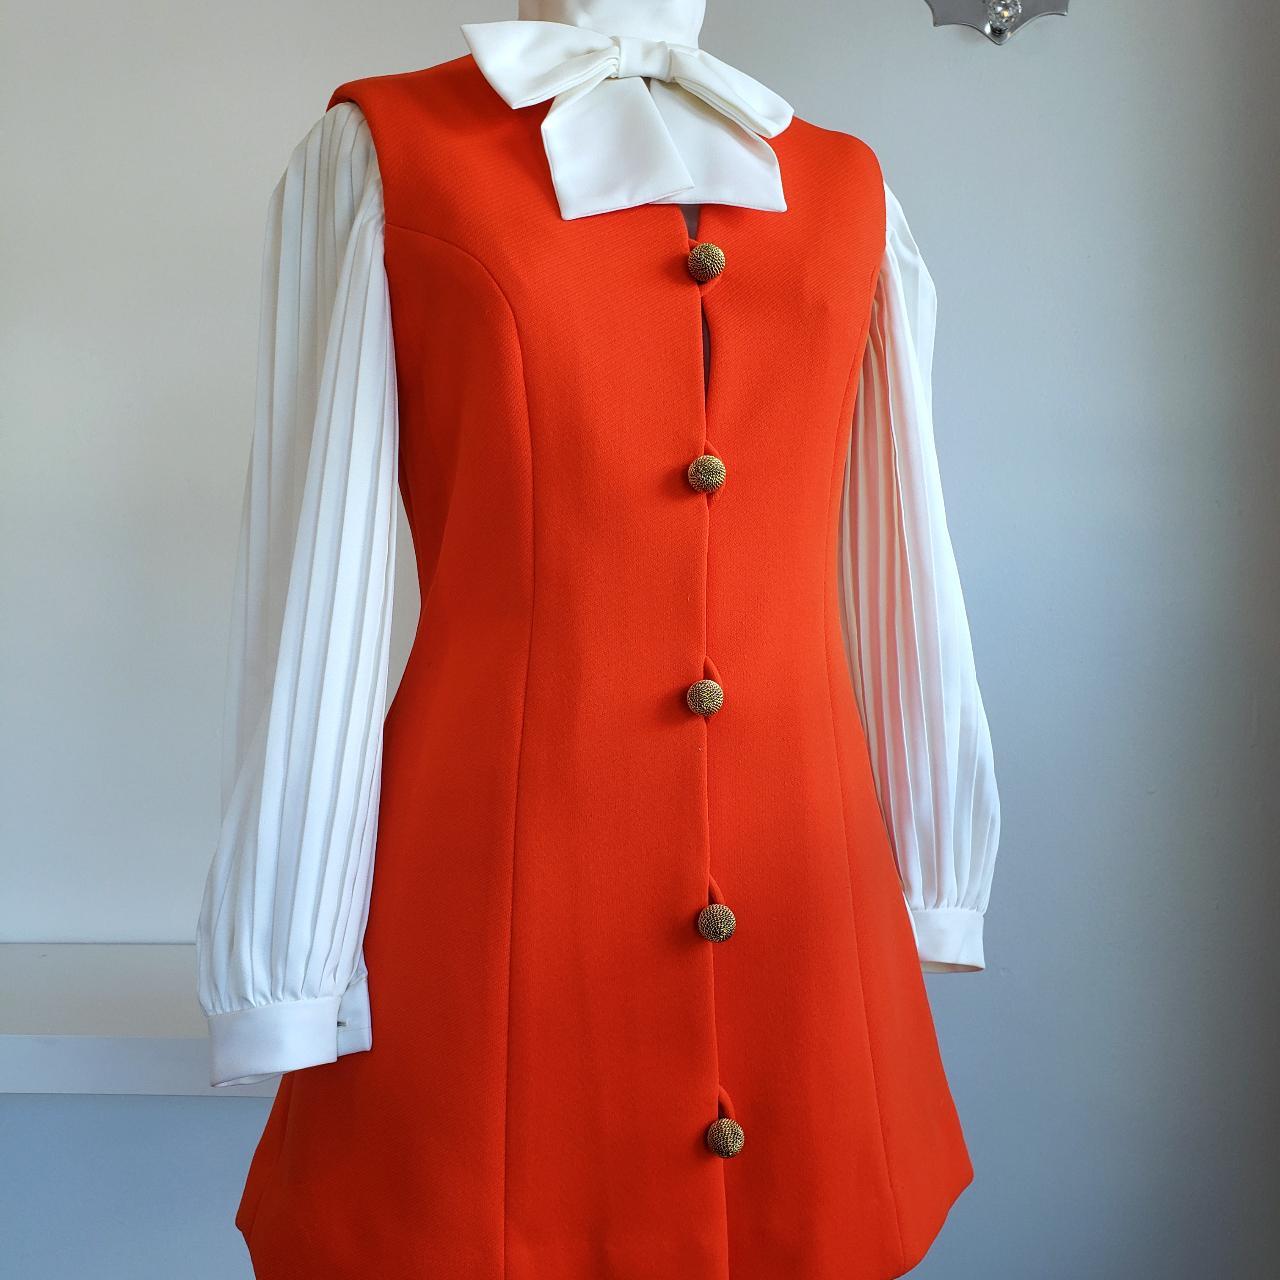 American Vintage Women's White and Orange Suit (4)